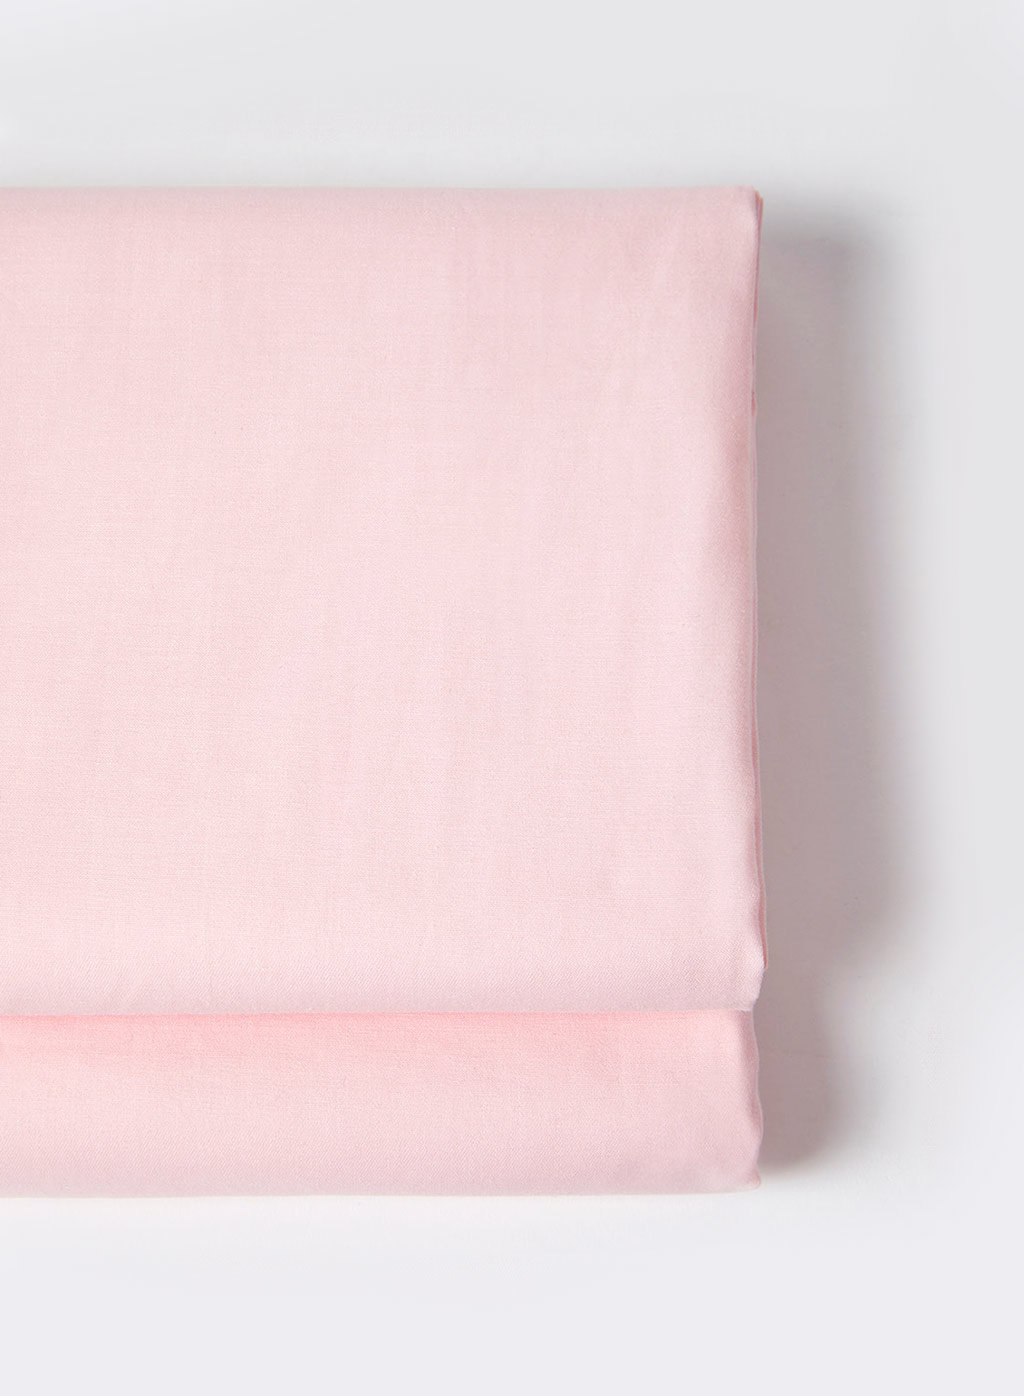 Pink Bed Sheet